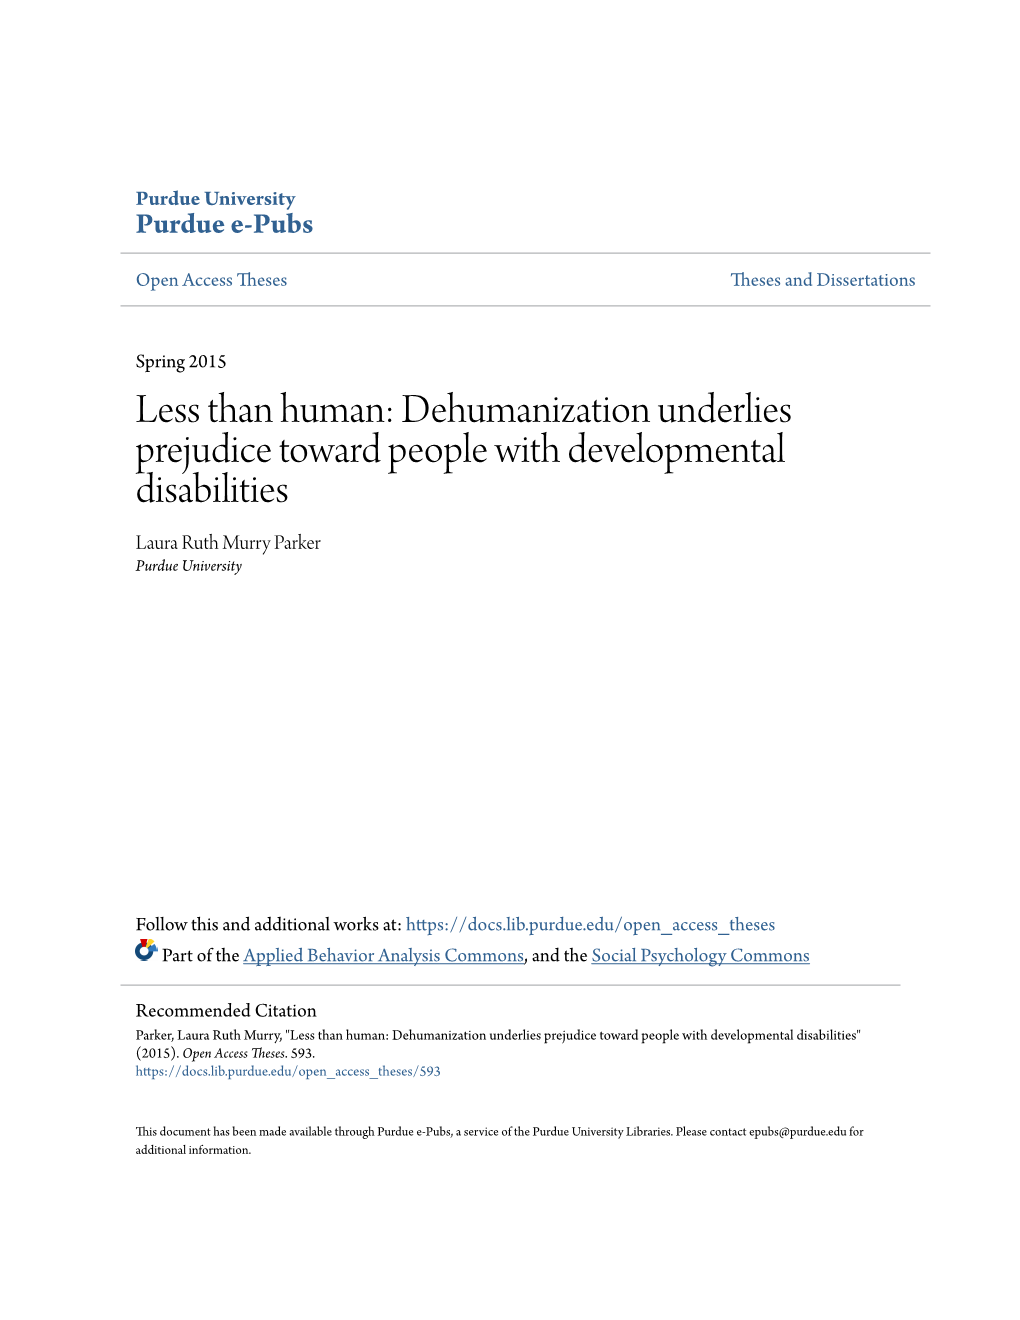 Dehumanization Underlies Prejudice Toward People with Developmental Disabilities Laura Ruth Murry Parker Purdue University